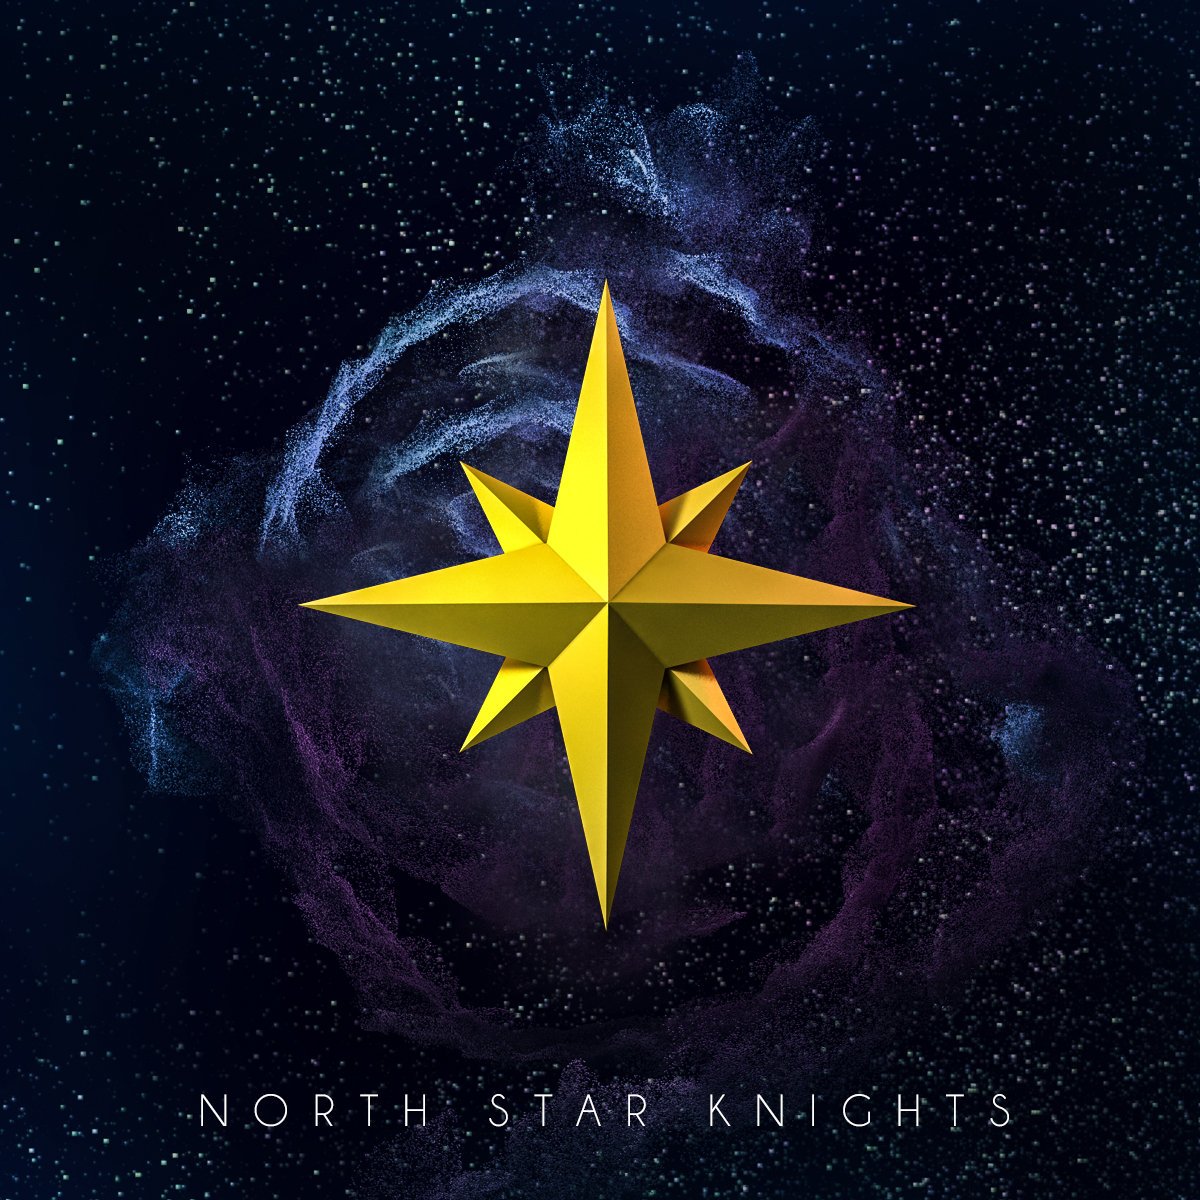 Северная звезда похожие. Звезда севера. Северная звезда the North Star. Заставка звезды севера. Звезда севера картинка.